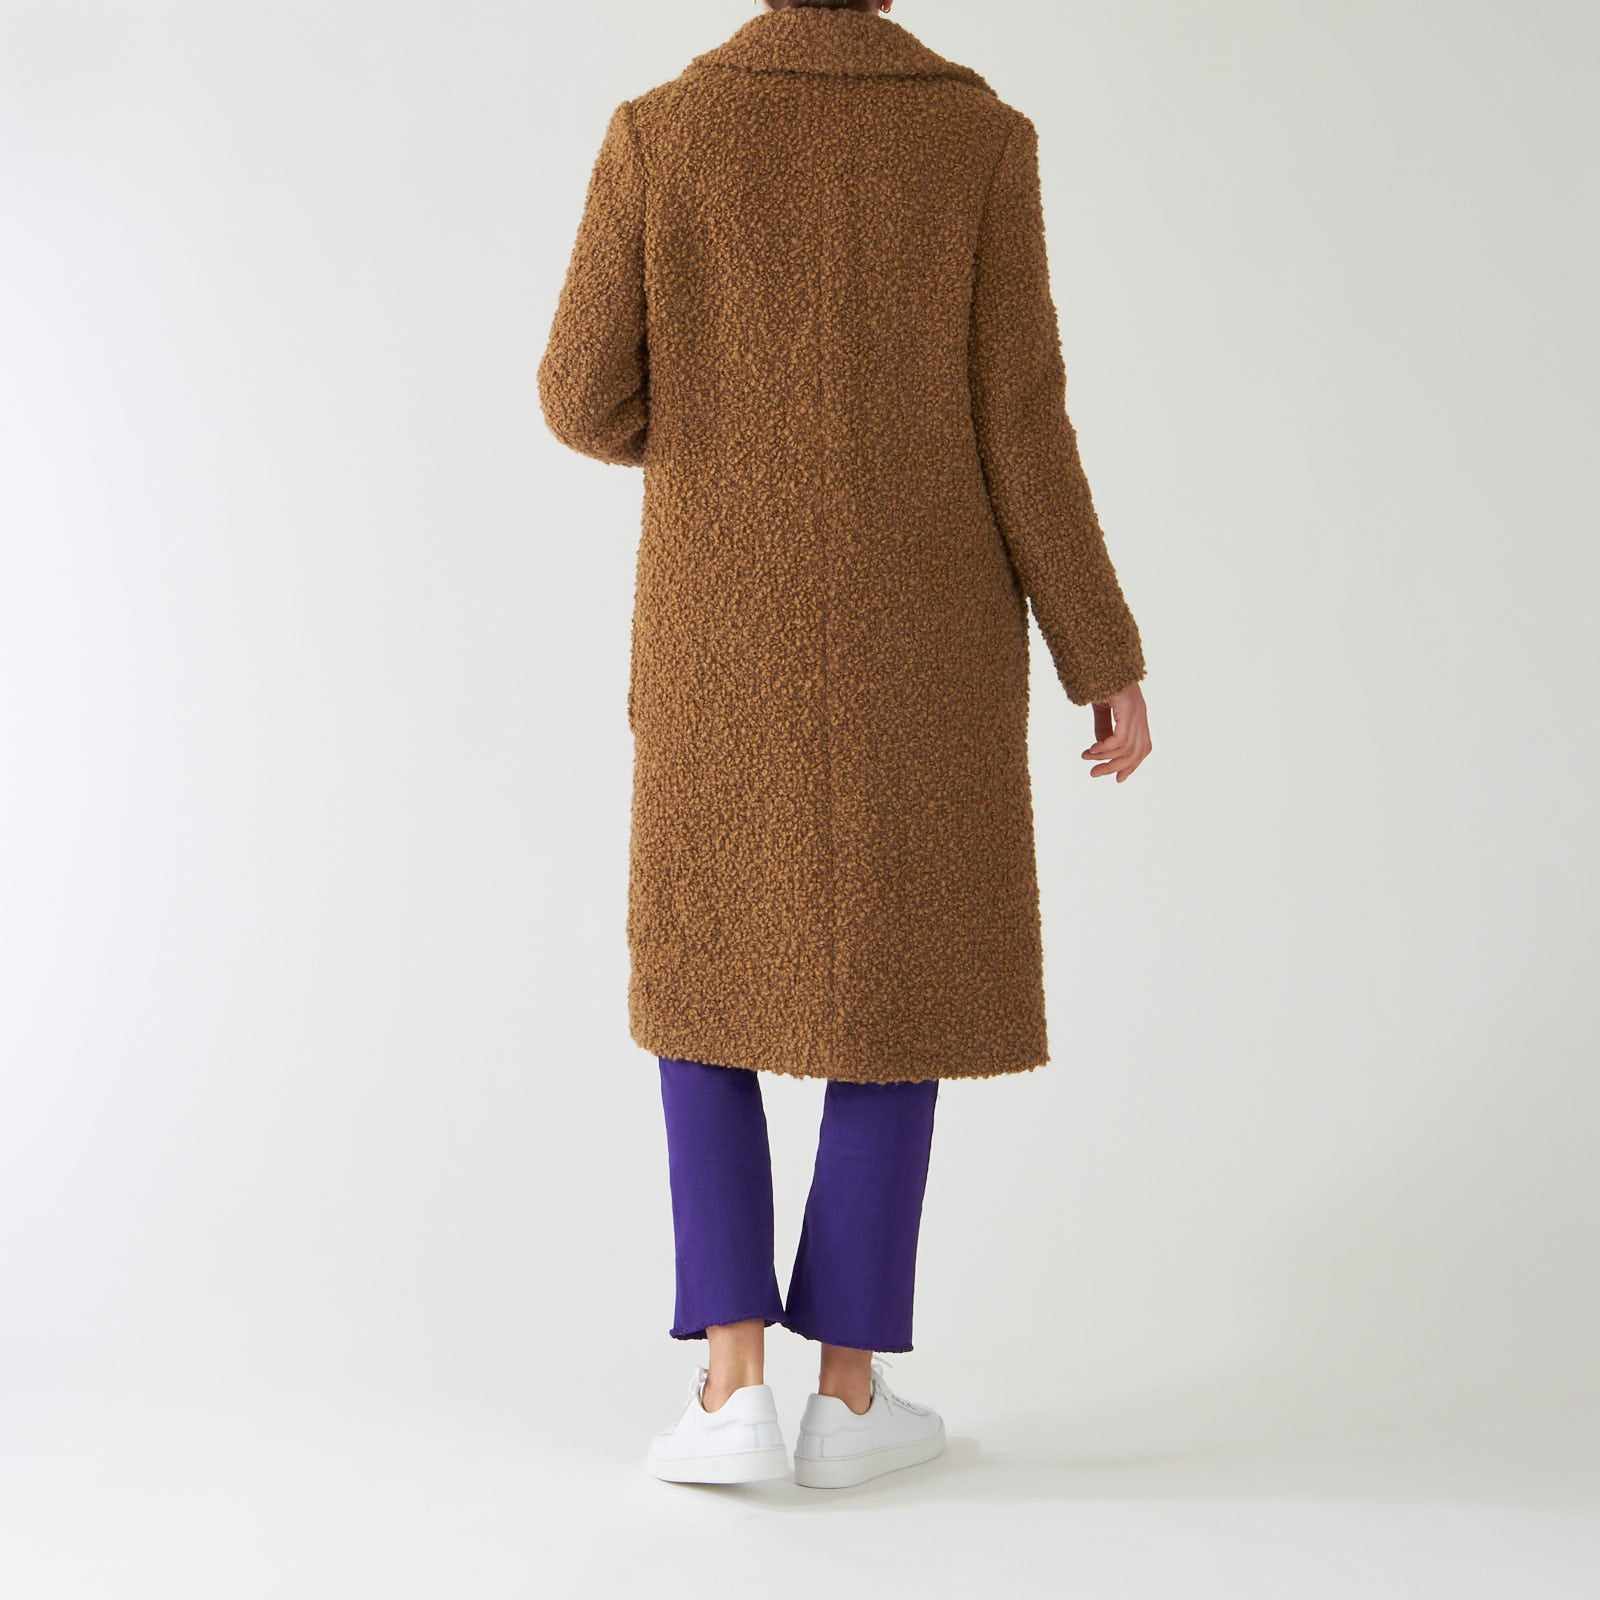 Miso Boucle Knit Wool Blend Coat